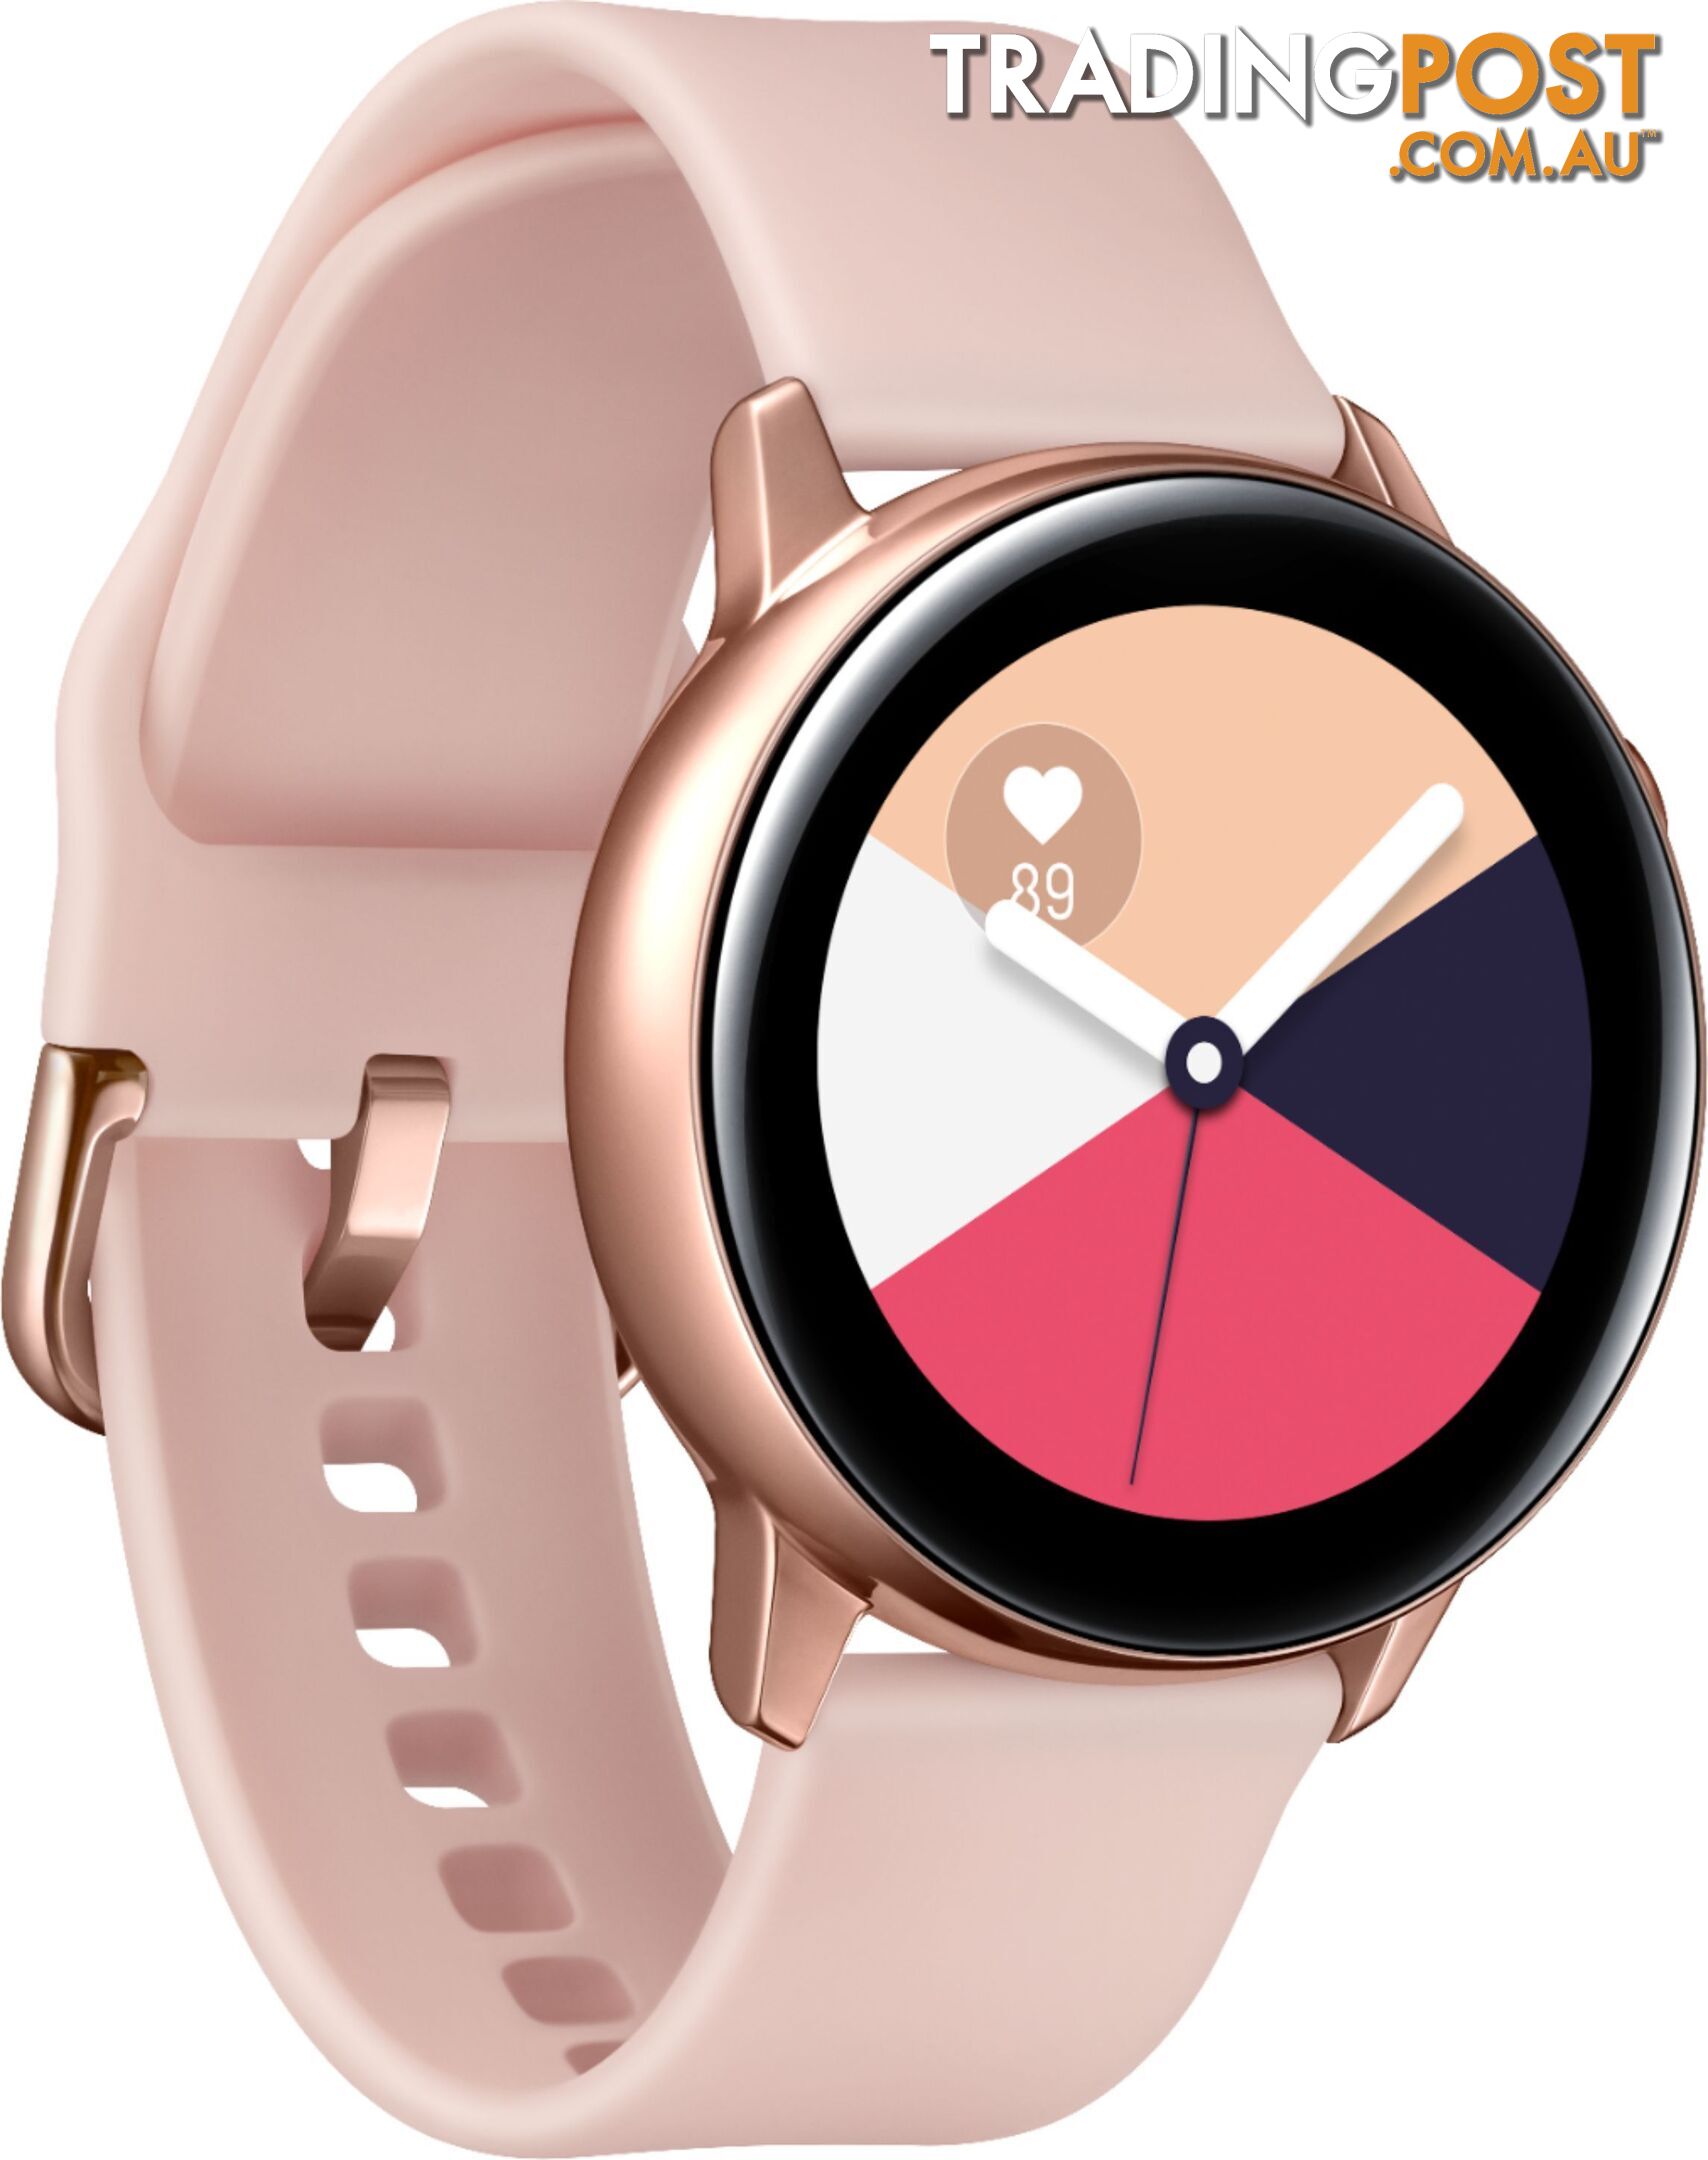 Samsung Galaxy Watch Active 40MM - 8E3AAD - smart watch